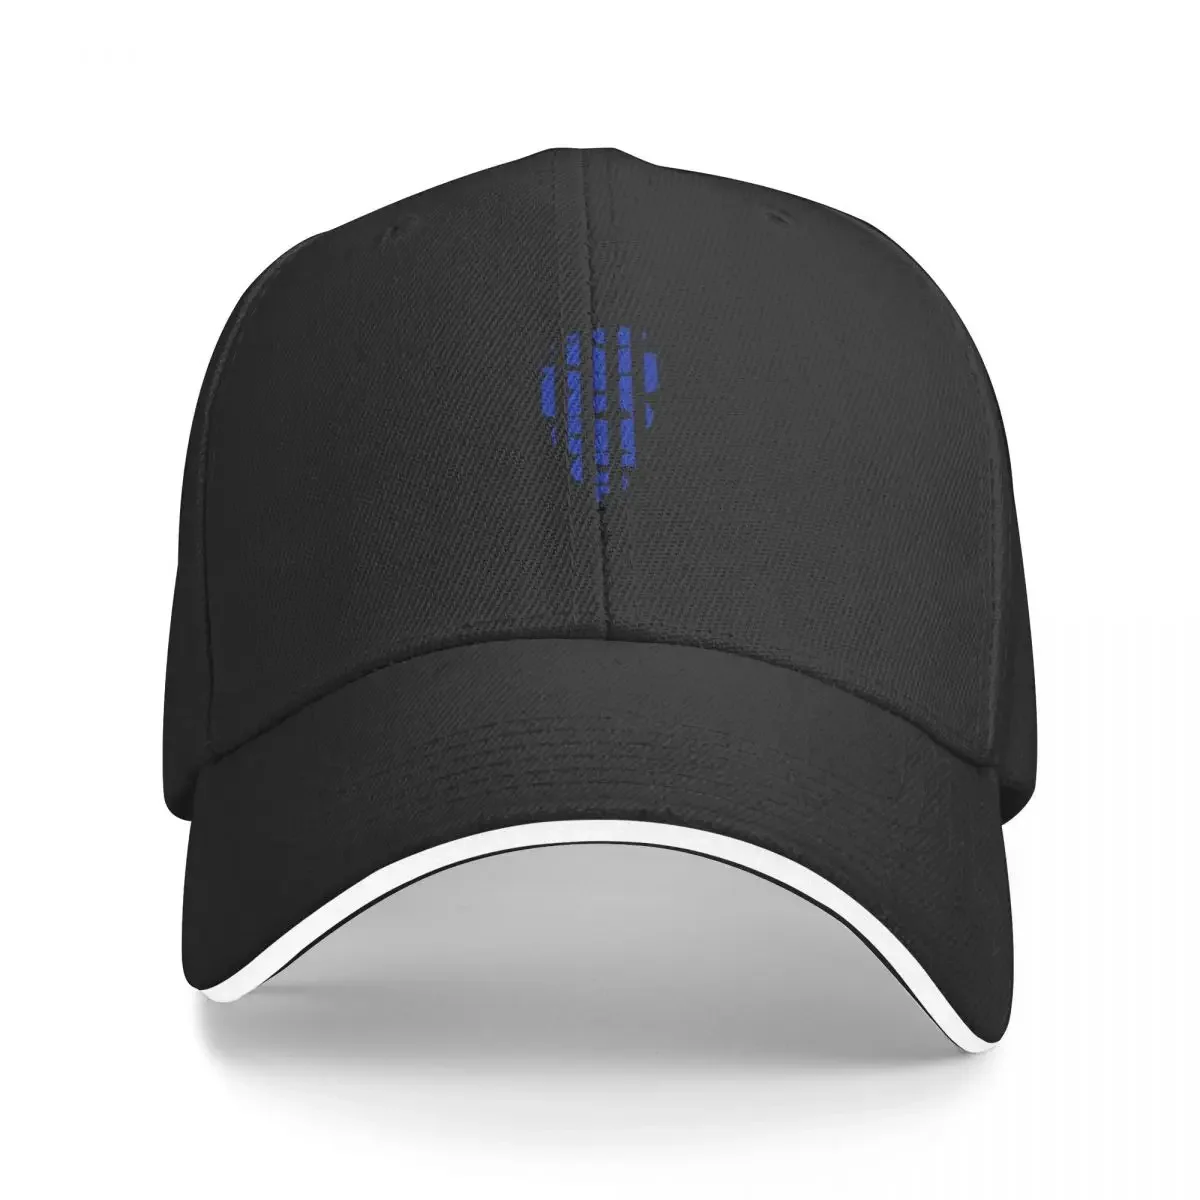 Nerazzurri Striped Black Baseball Cap beach hat western Hat Hats For Women Men's